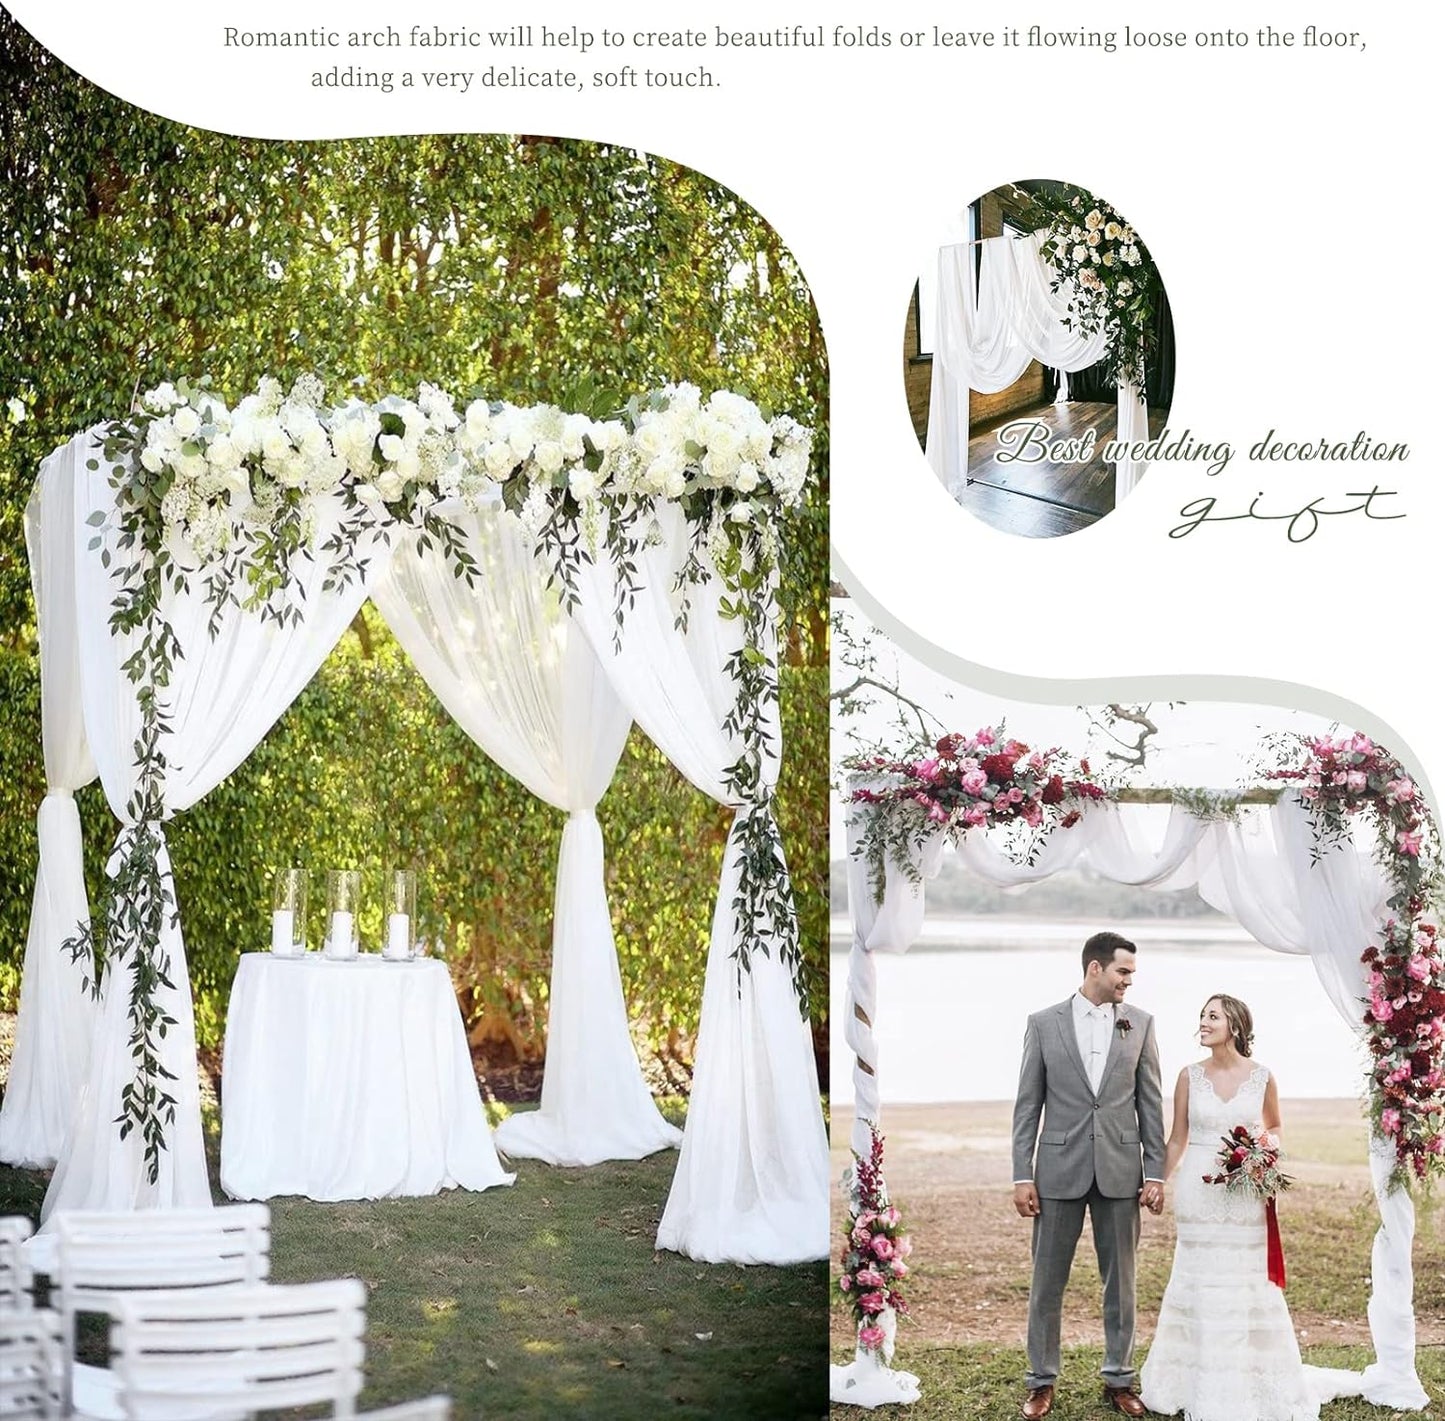 28"x20ft Wedding Arch Drapes for Ceremony Chiffon Fabric